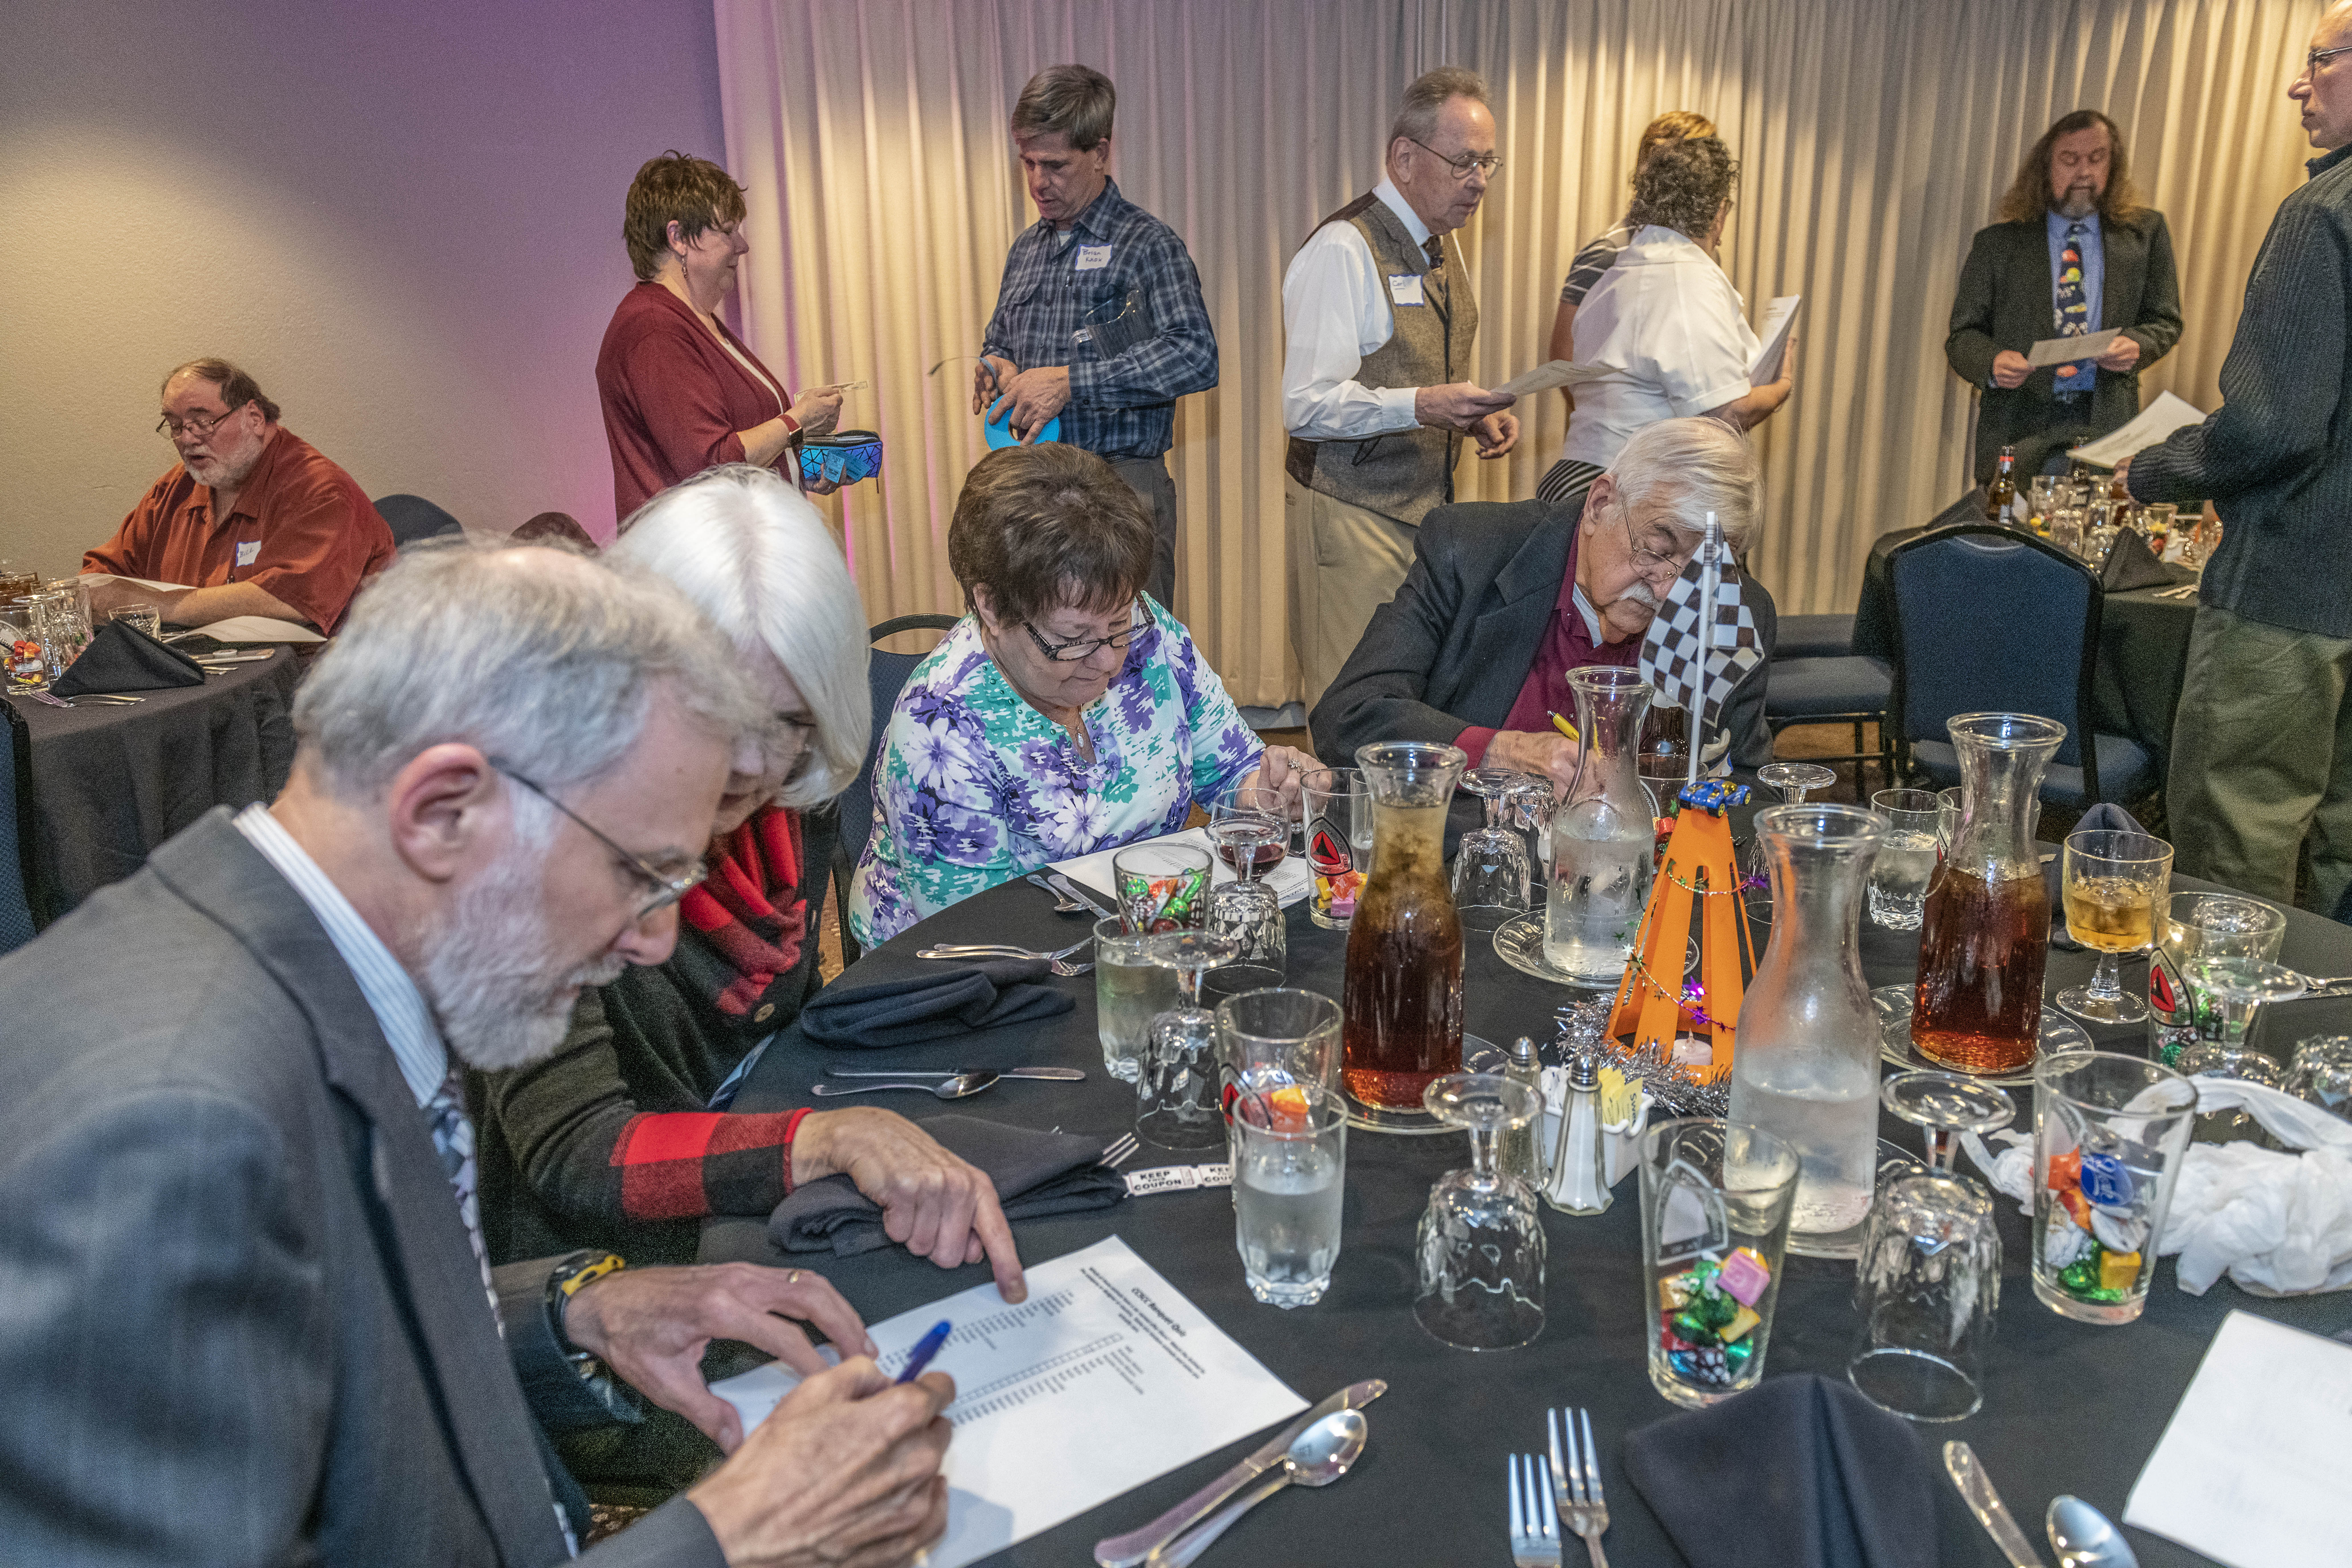 CCSCC awards banquet
on Saturday, January 5, 2019.